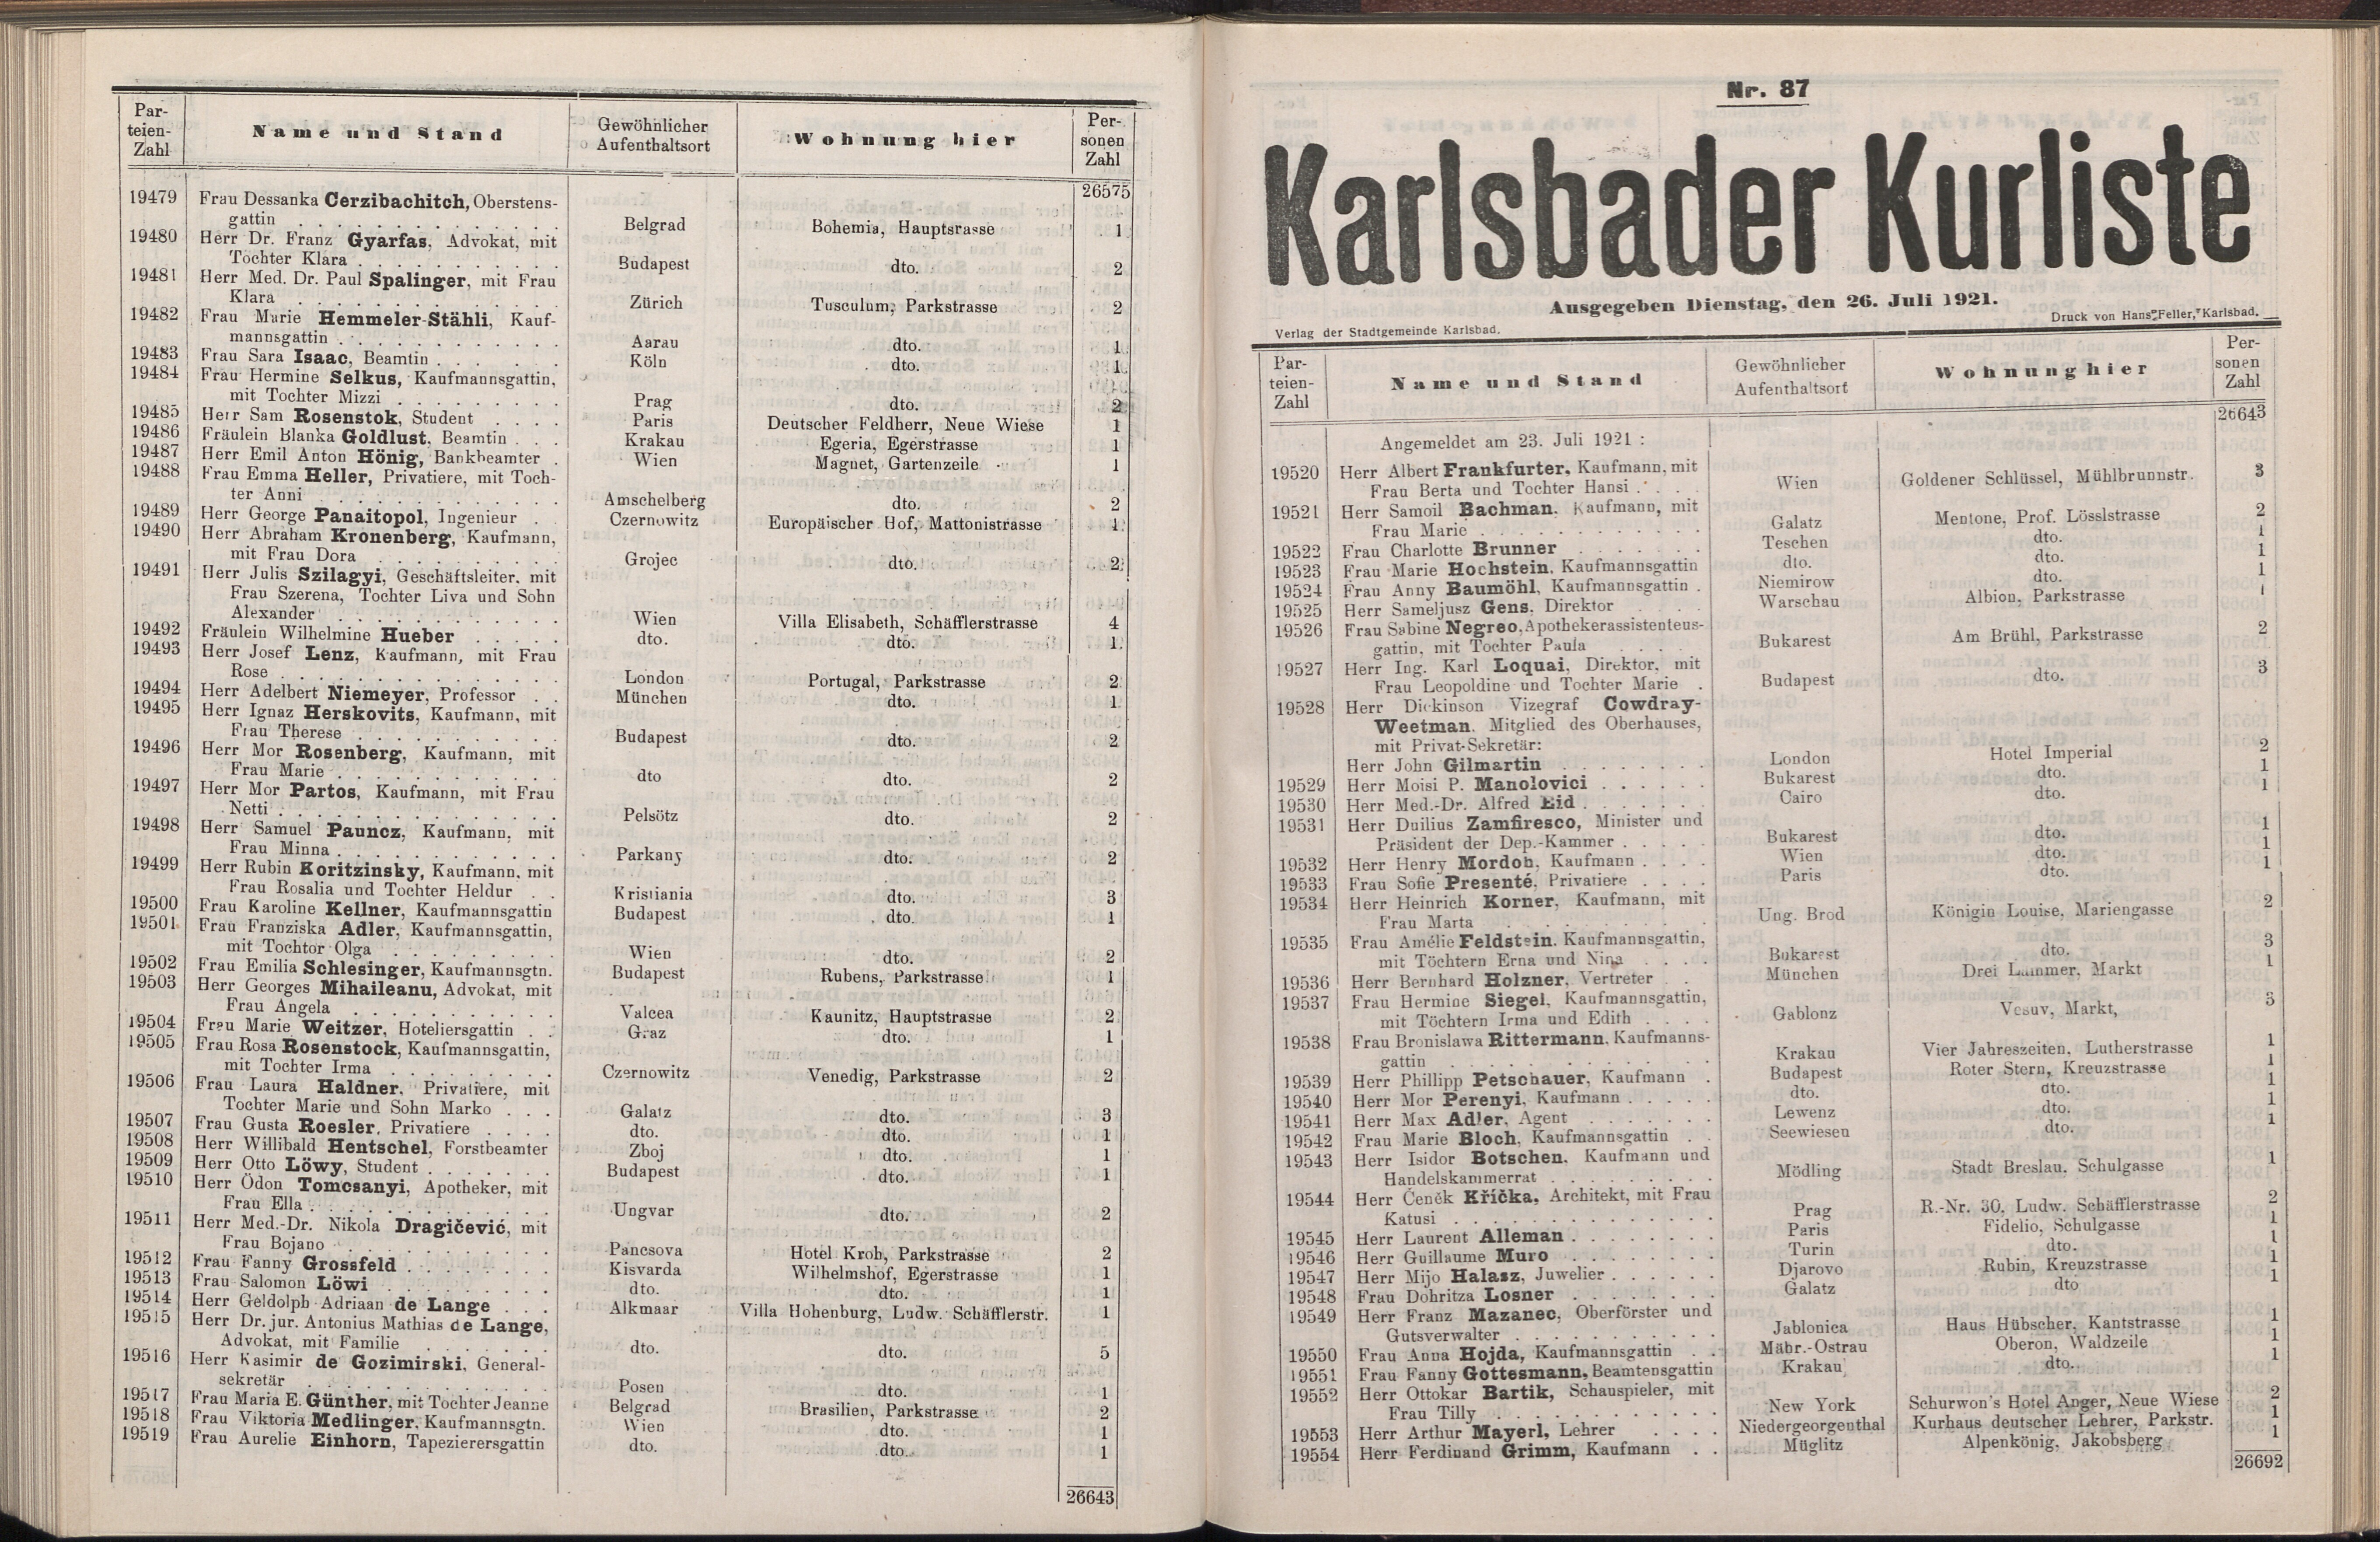 300. soap-kv_knihovna_karlsbader-kurliste-1921_3000